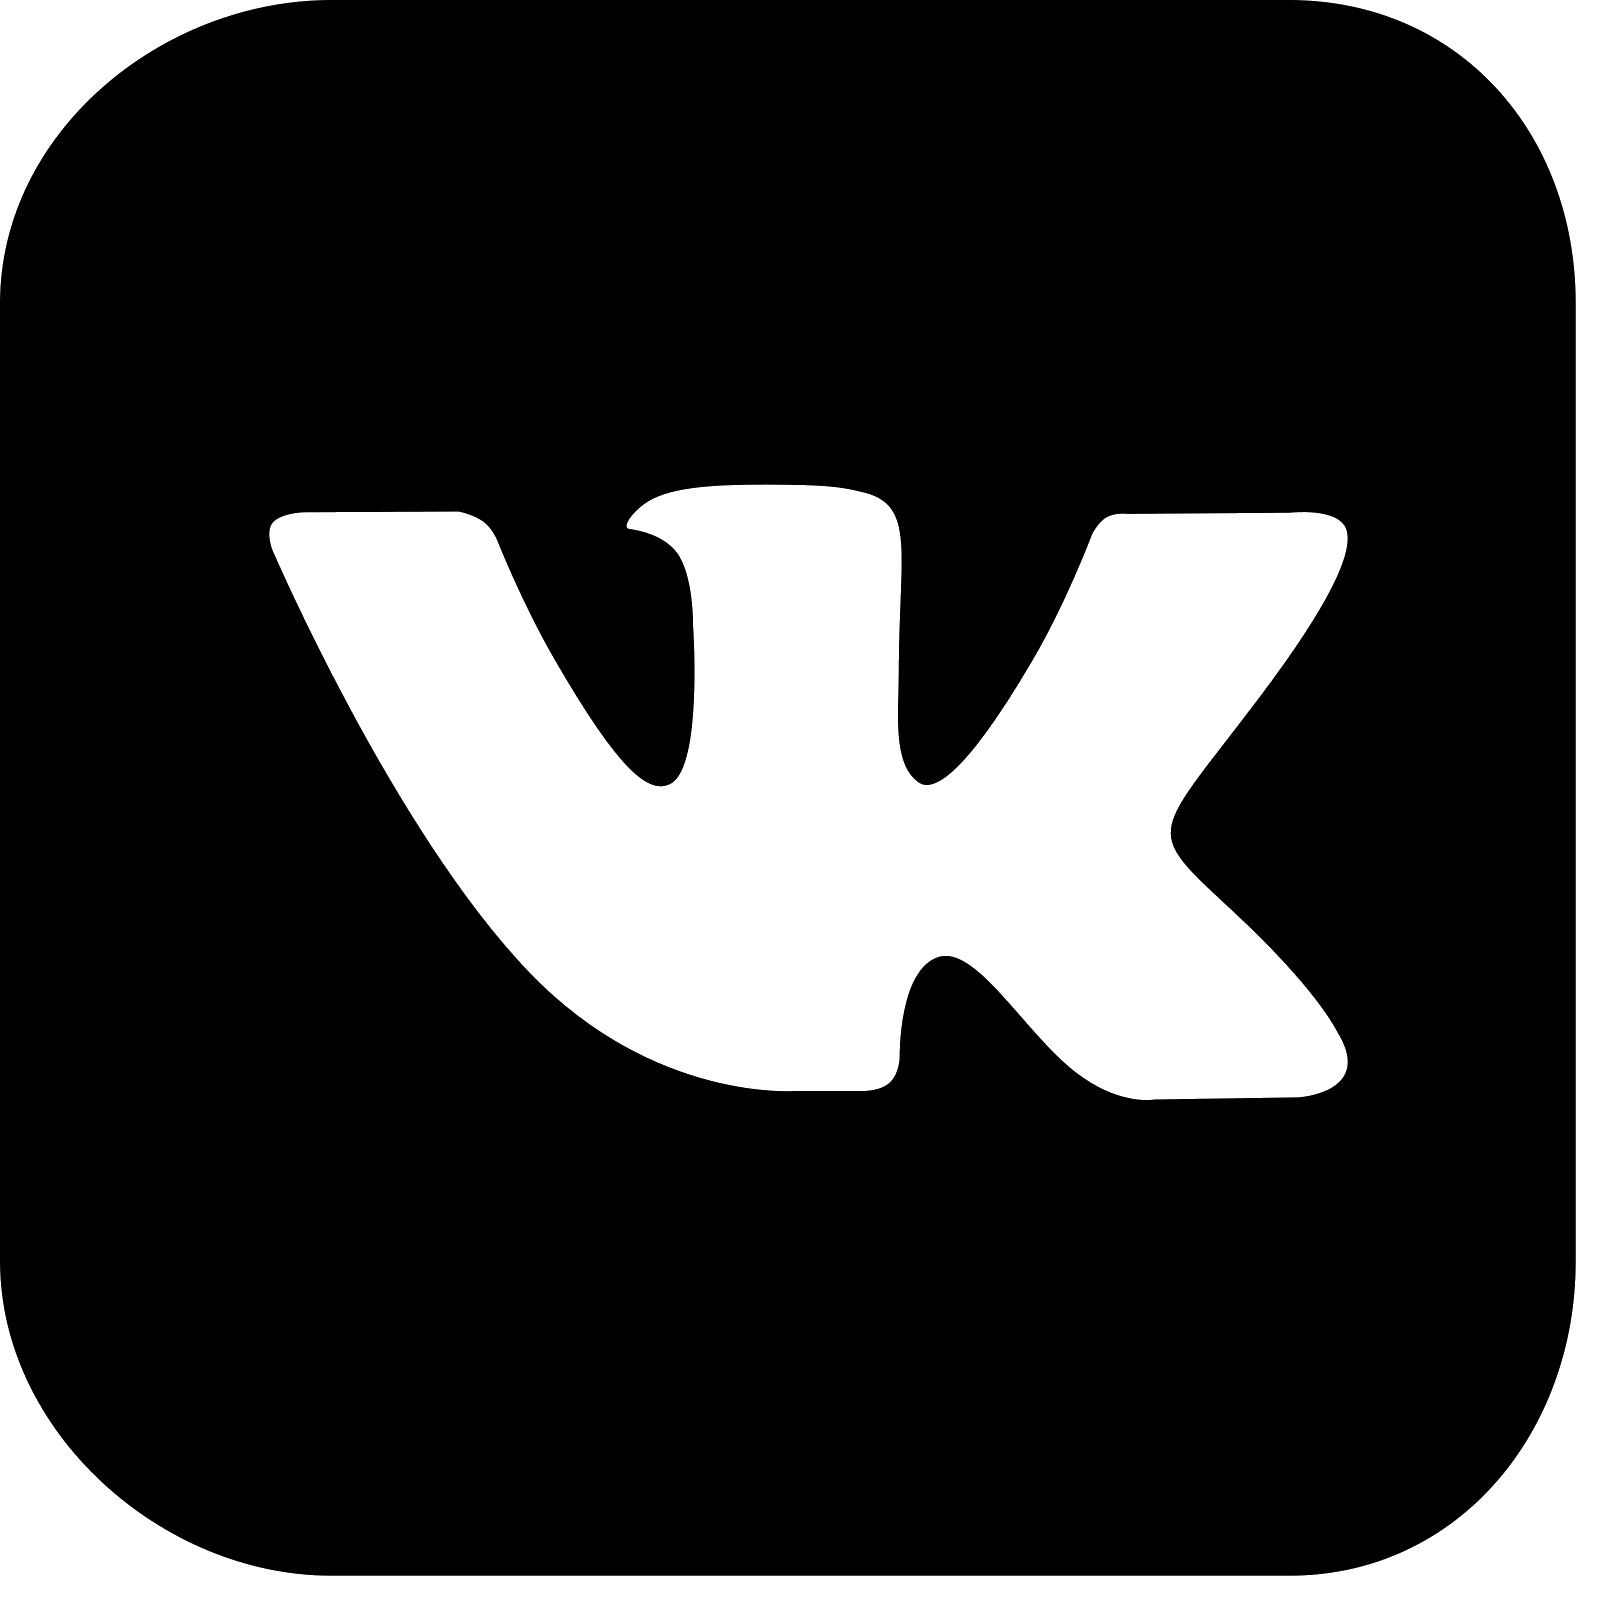 Https vk nskviktorina. Логотип ВК. Маленький значок ВК. Логотип ВК черный. Логотип ВК без фона.